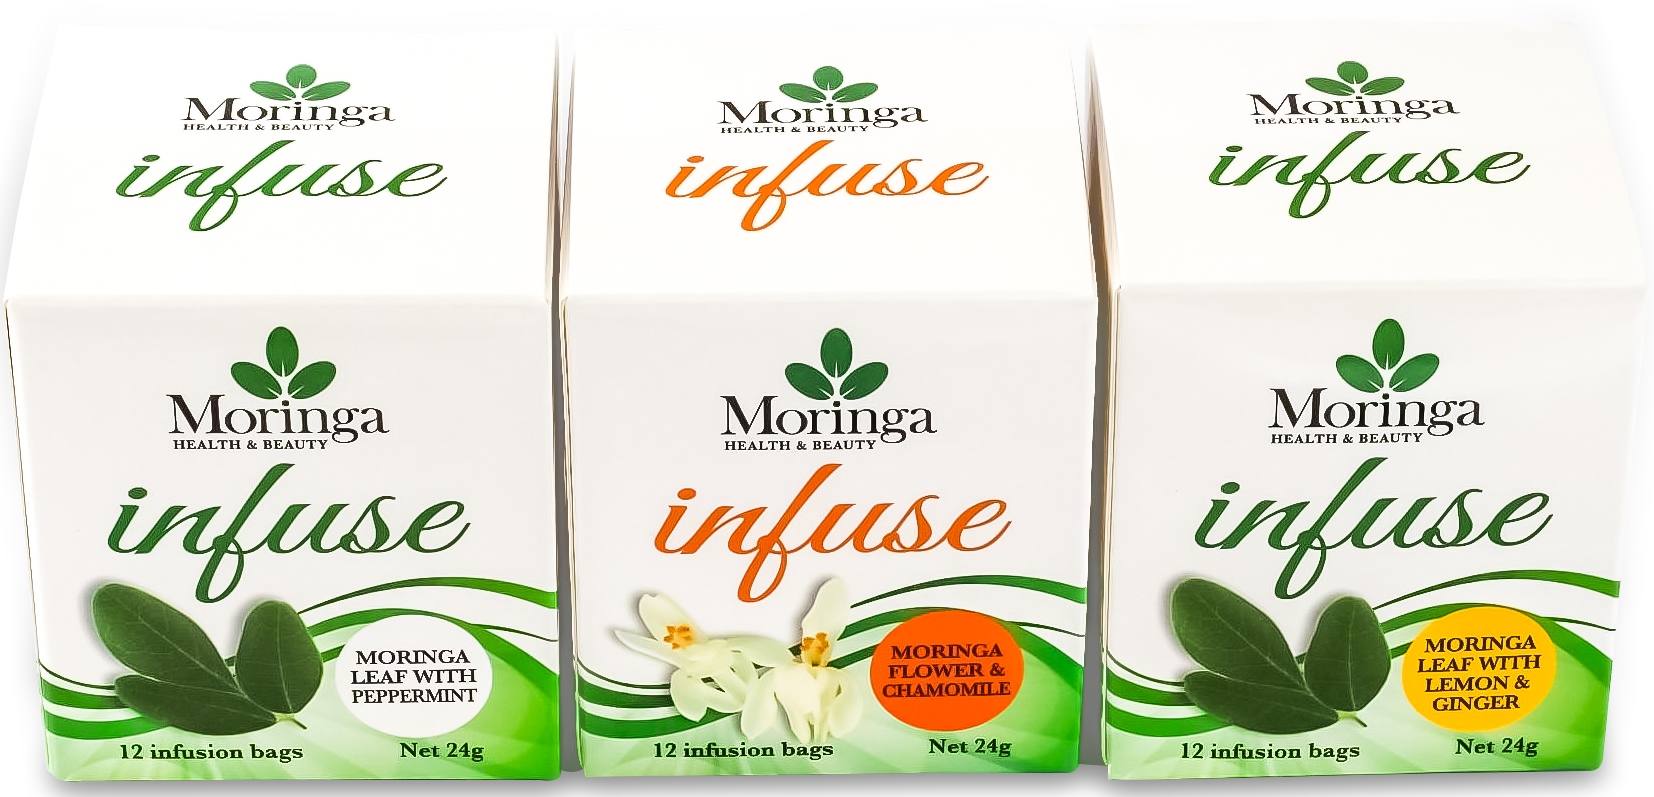 AUSTRALIAN Moringa 3 pack Tea Bags - Moringa FLOWERS+Charmomile plus Moringa LEAF+Ginger & Lemon plus Moringa LEAF+Peppermint - 36 bags